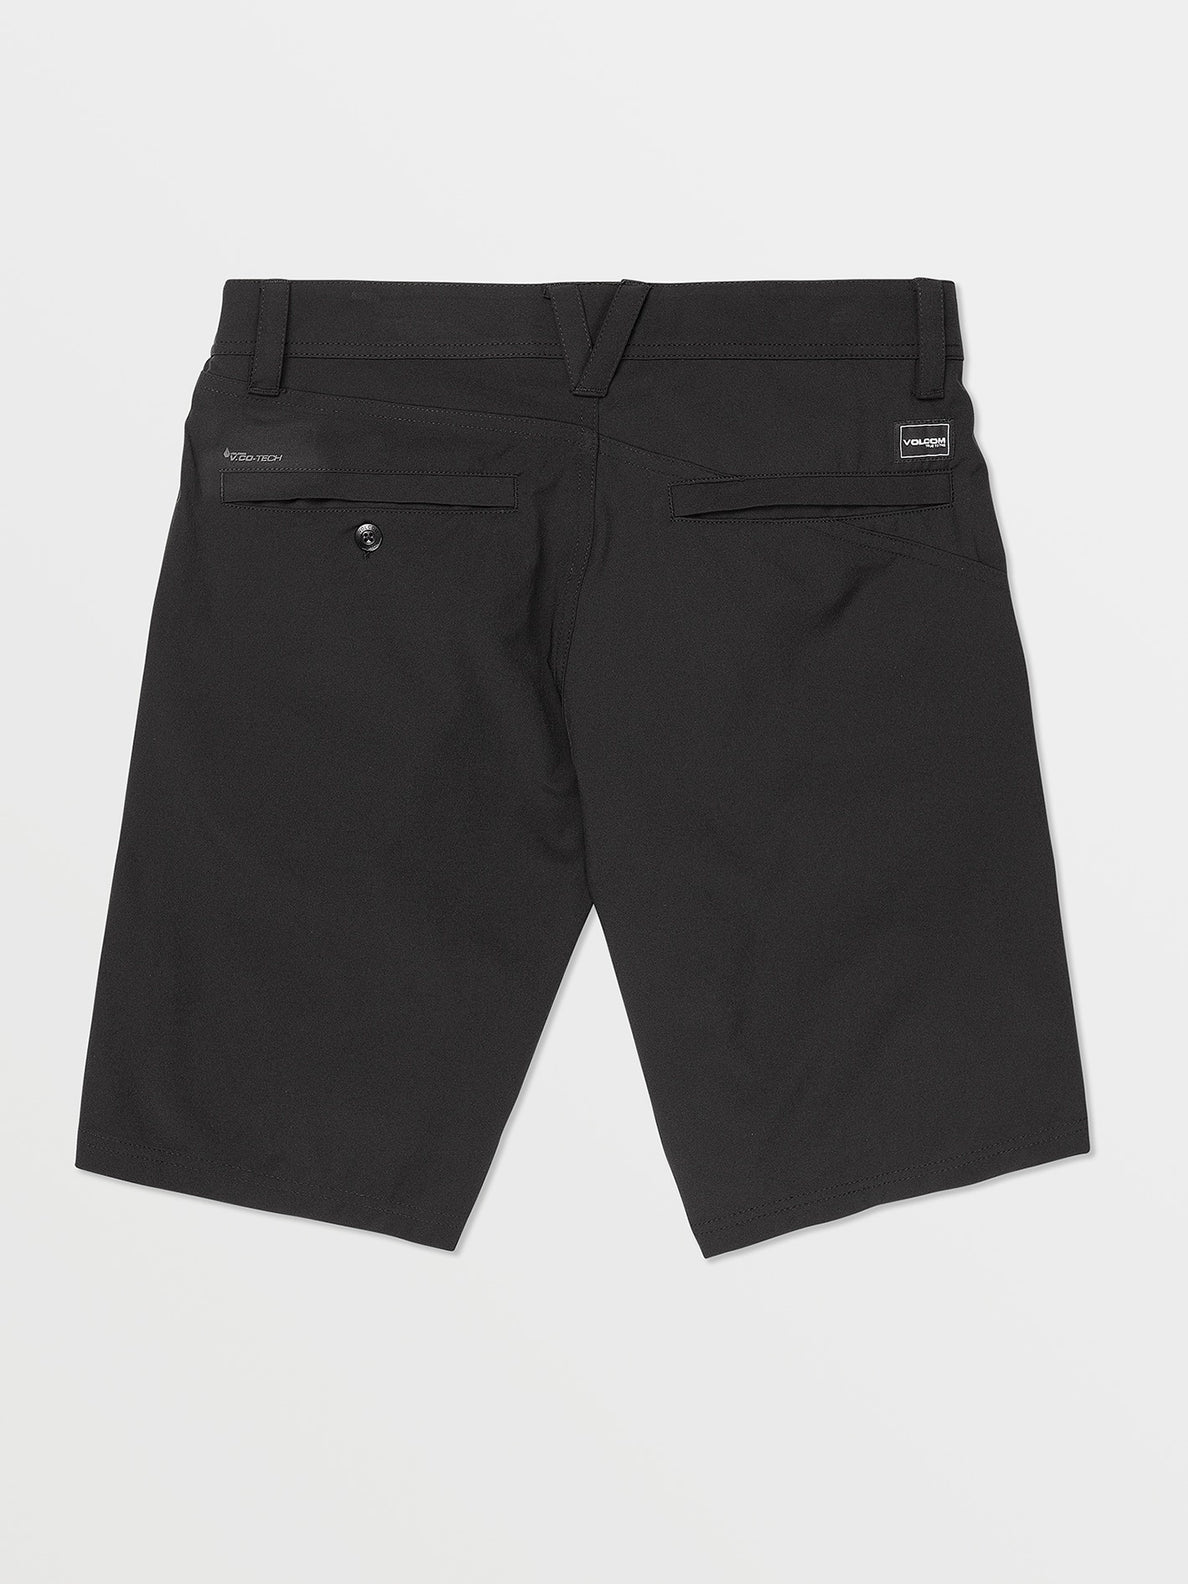 Frickin Cross Shred Static Shorts - Black